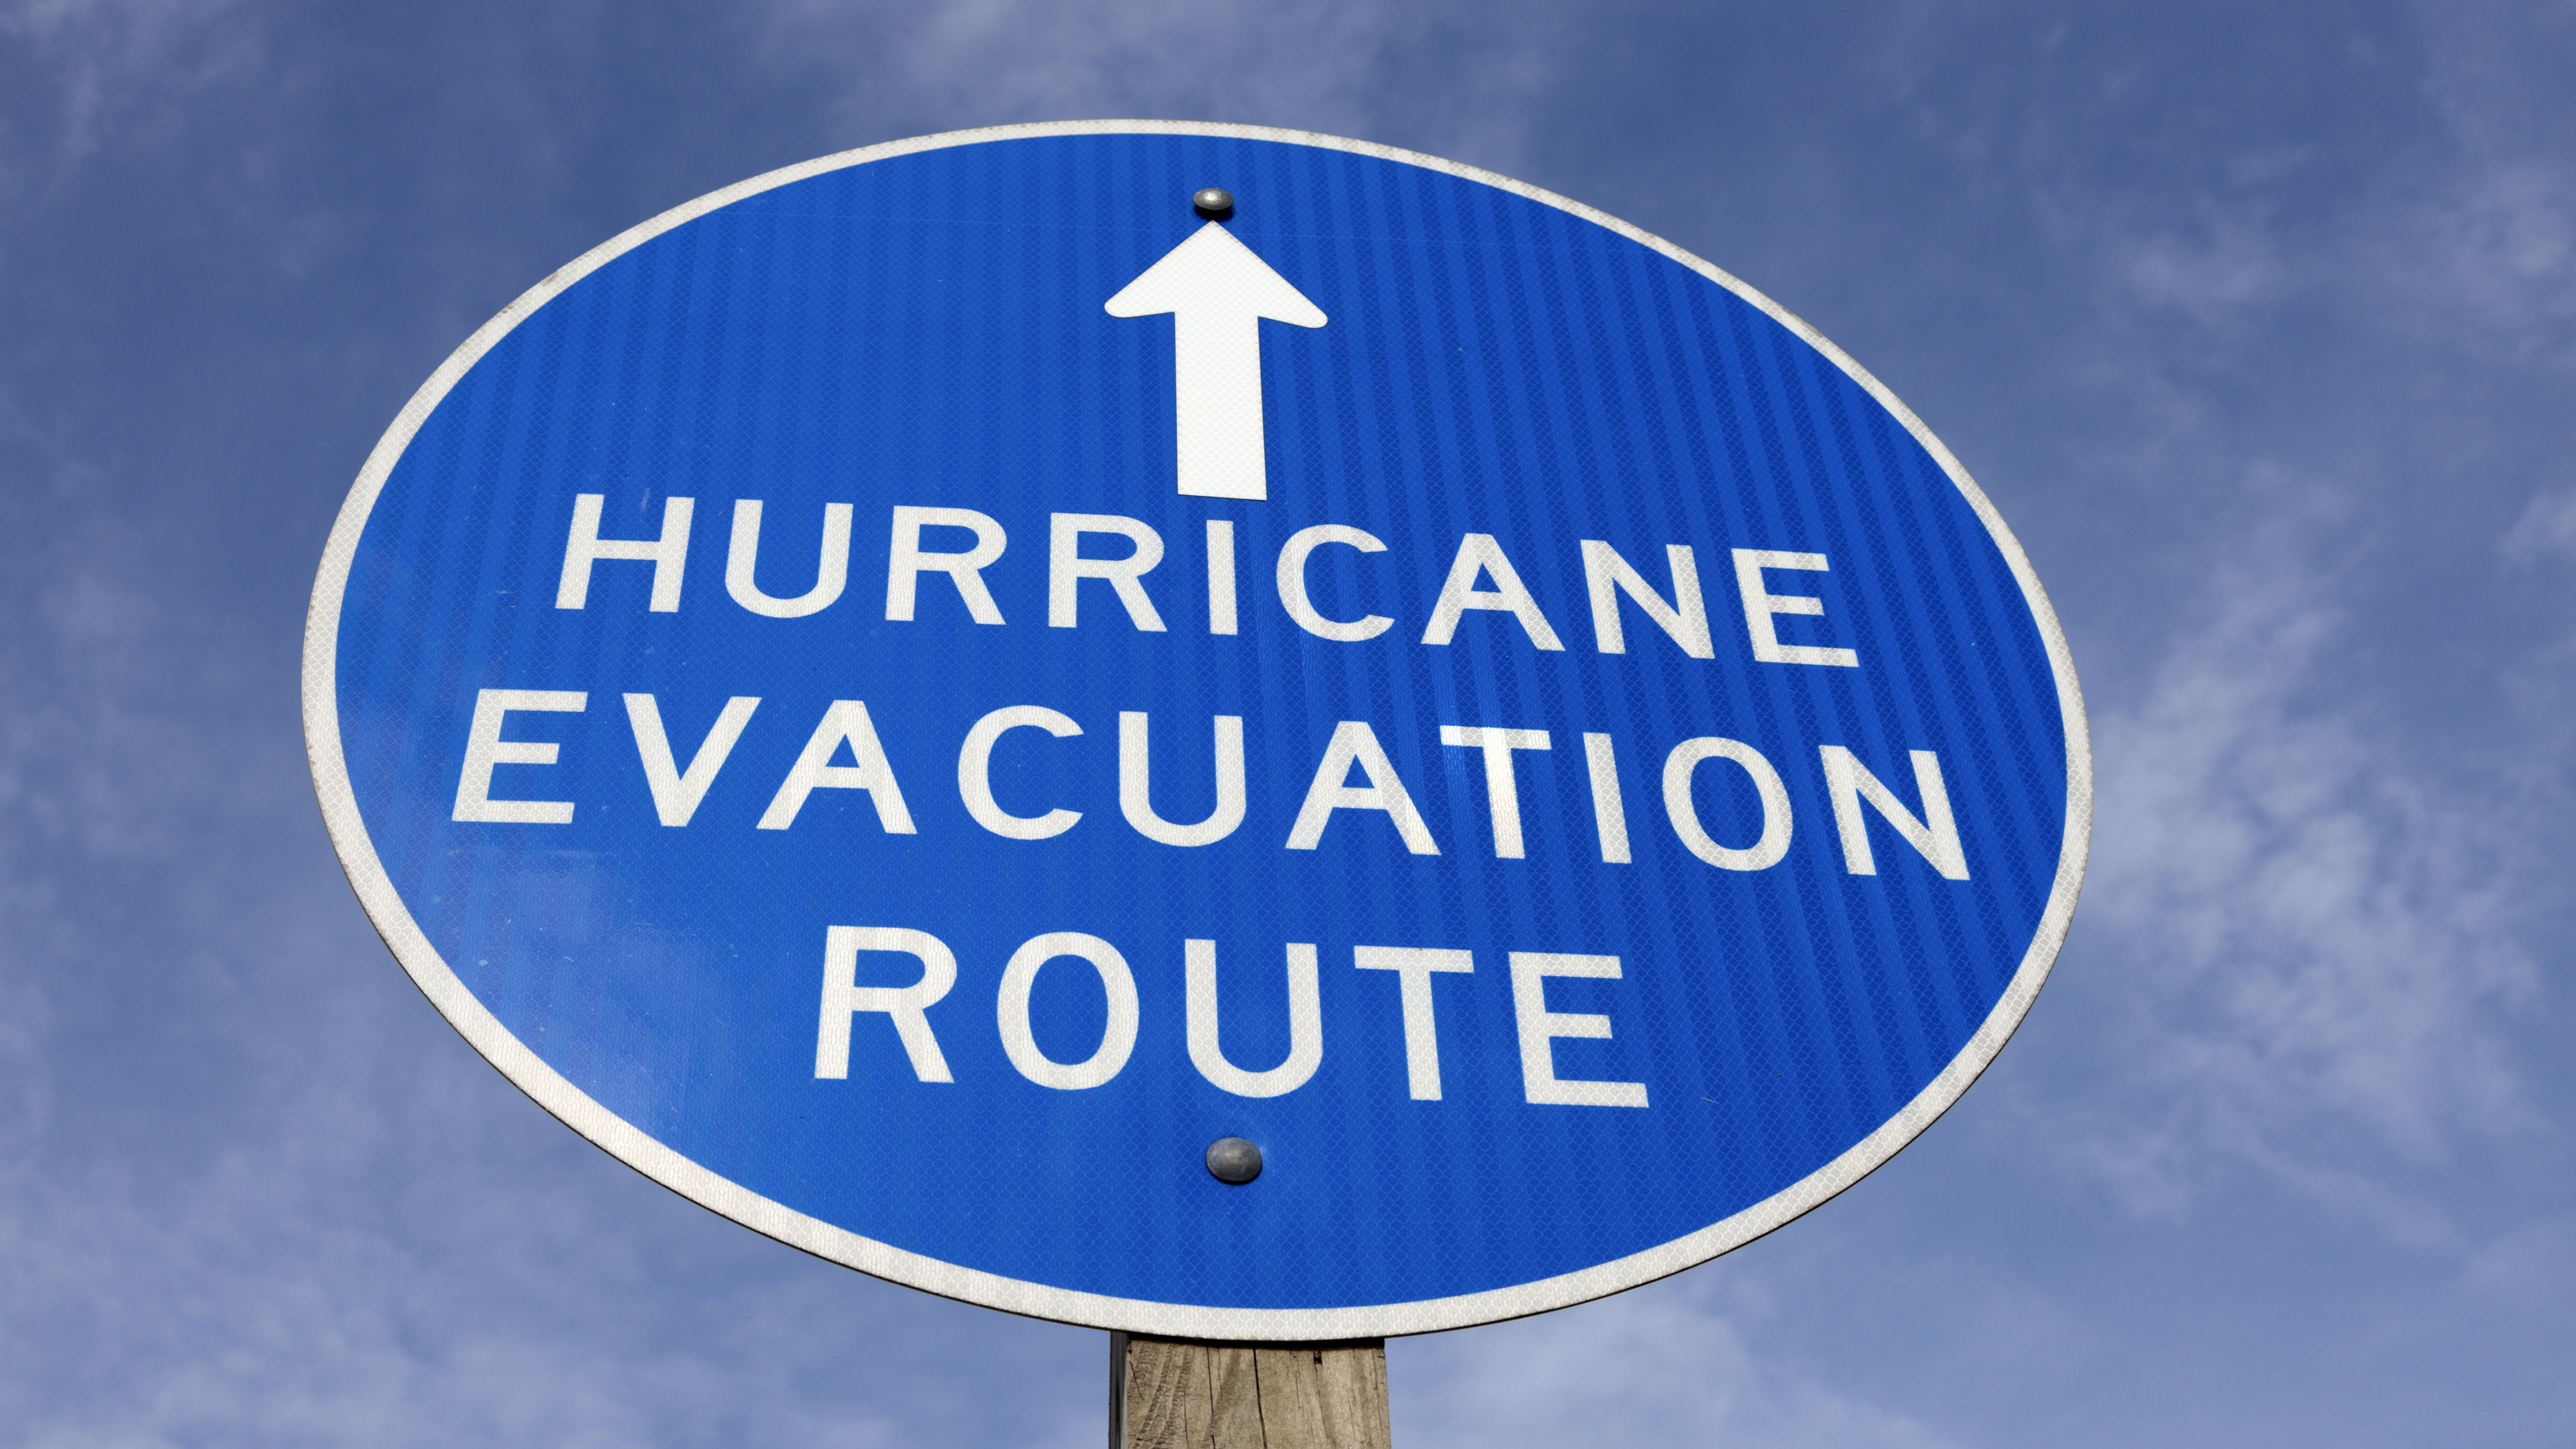 Sign: Hurricane Evacuation Route